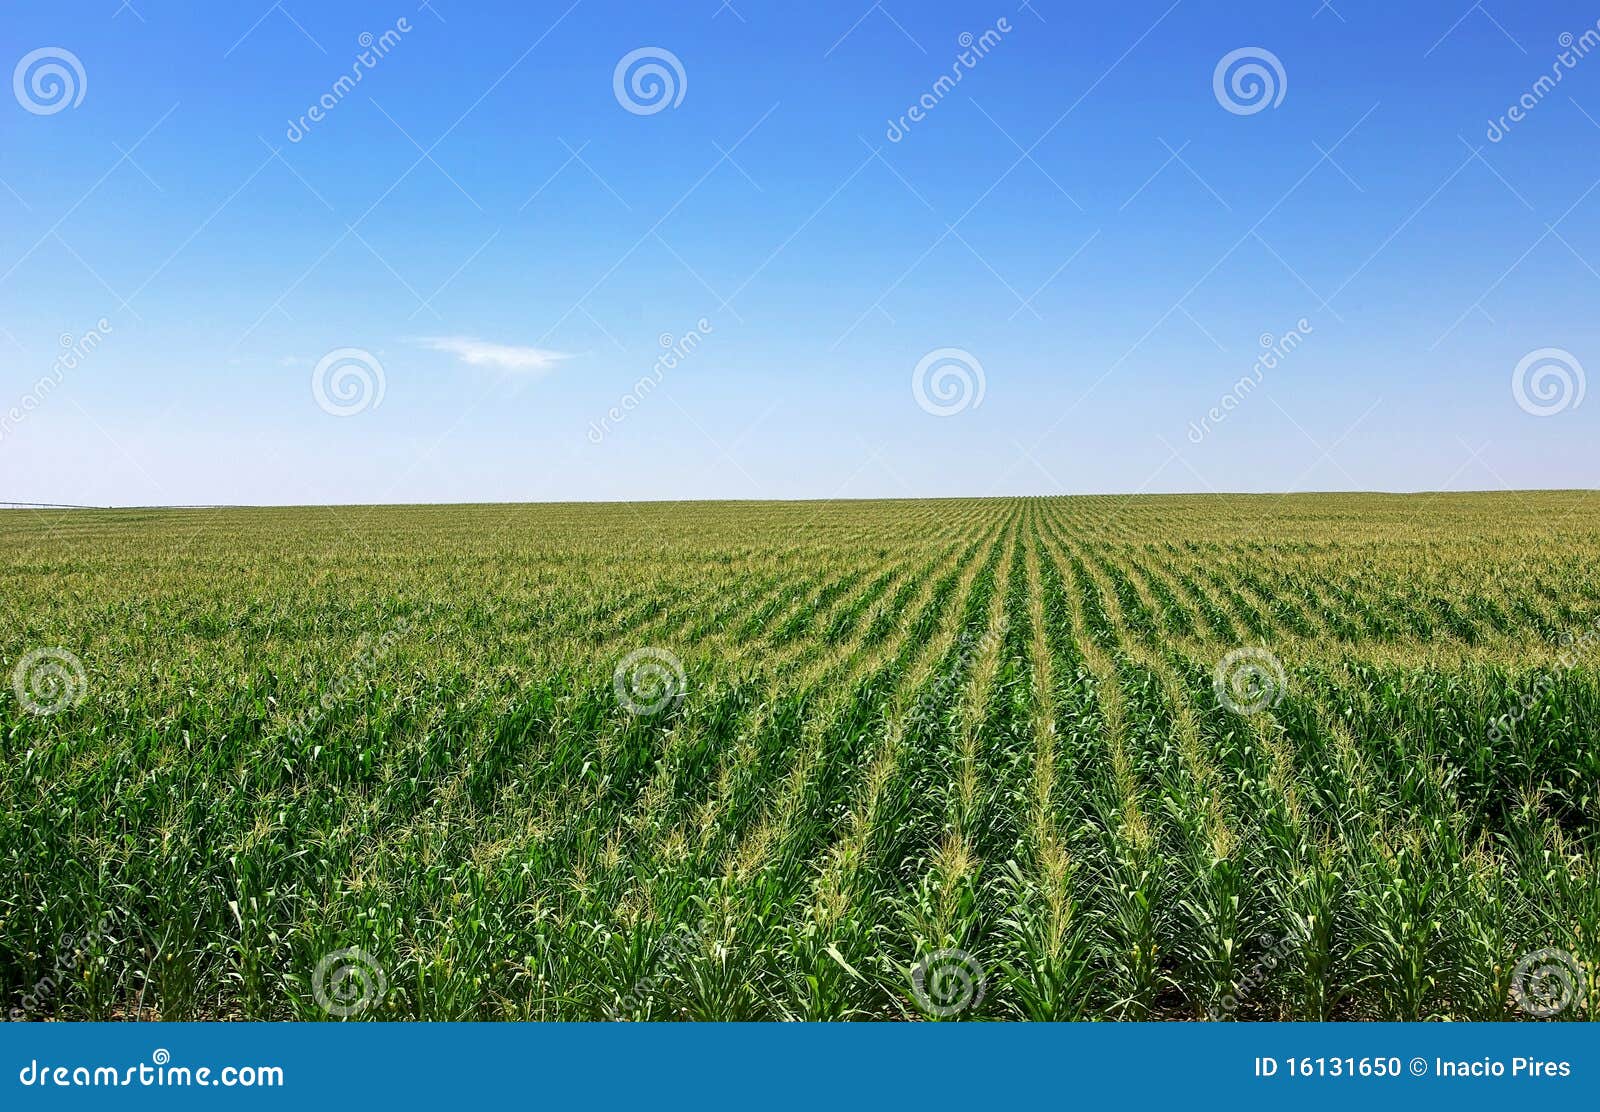 cornfield at portugal.